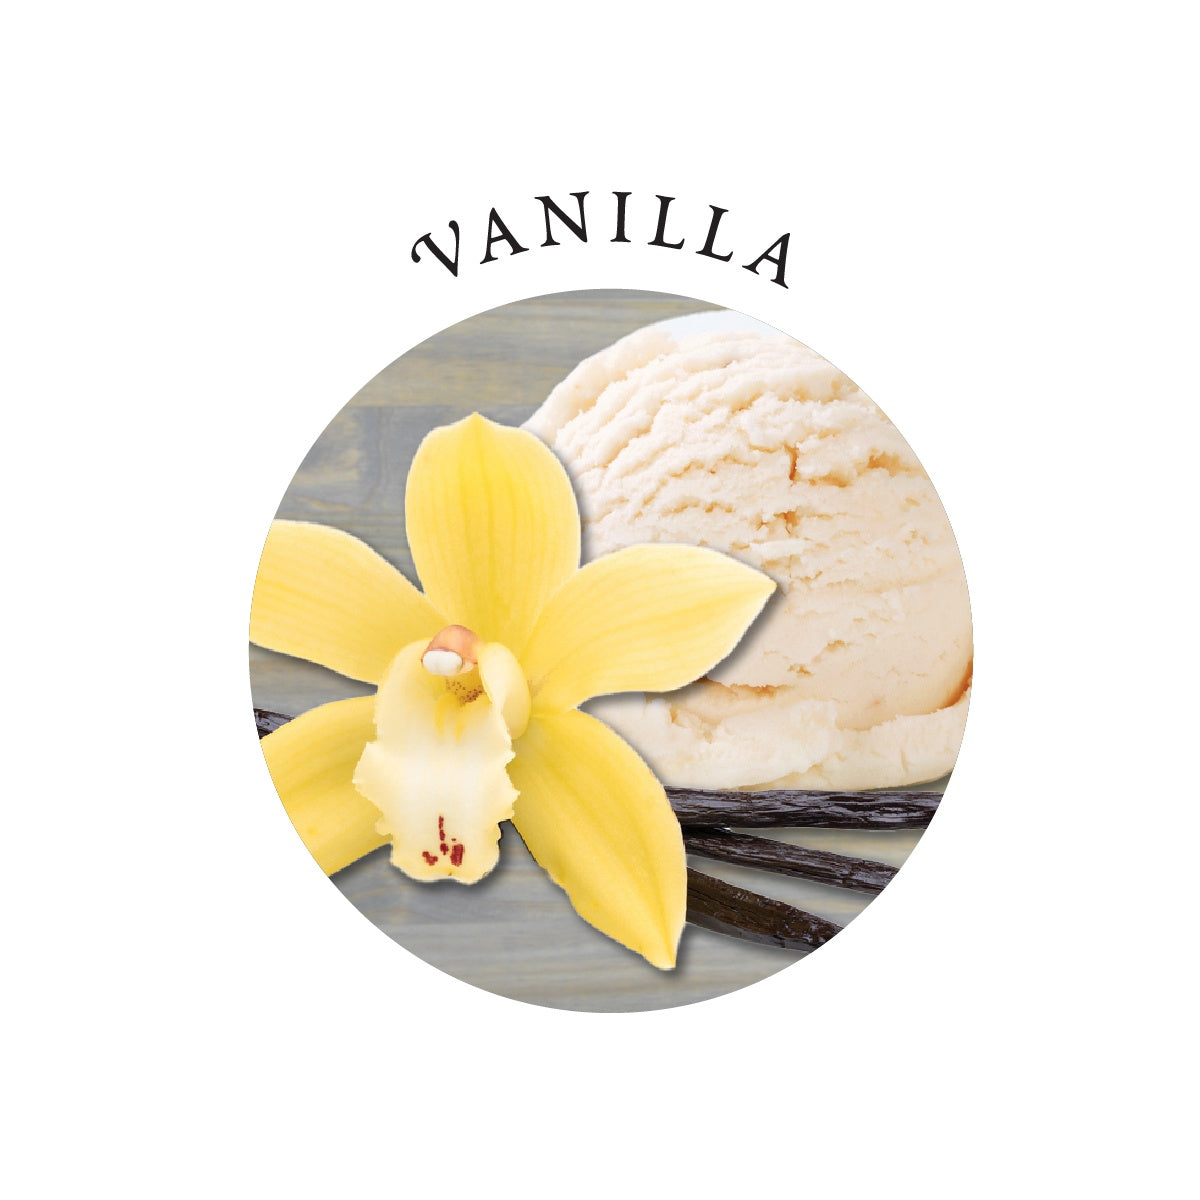 Earthly Body Edible Massage Oil - Vanilla, 2oz/60ml